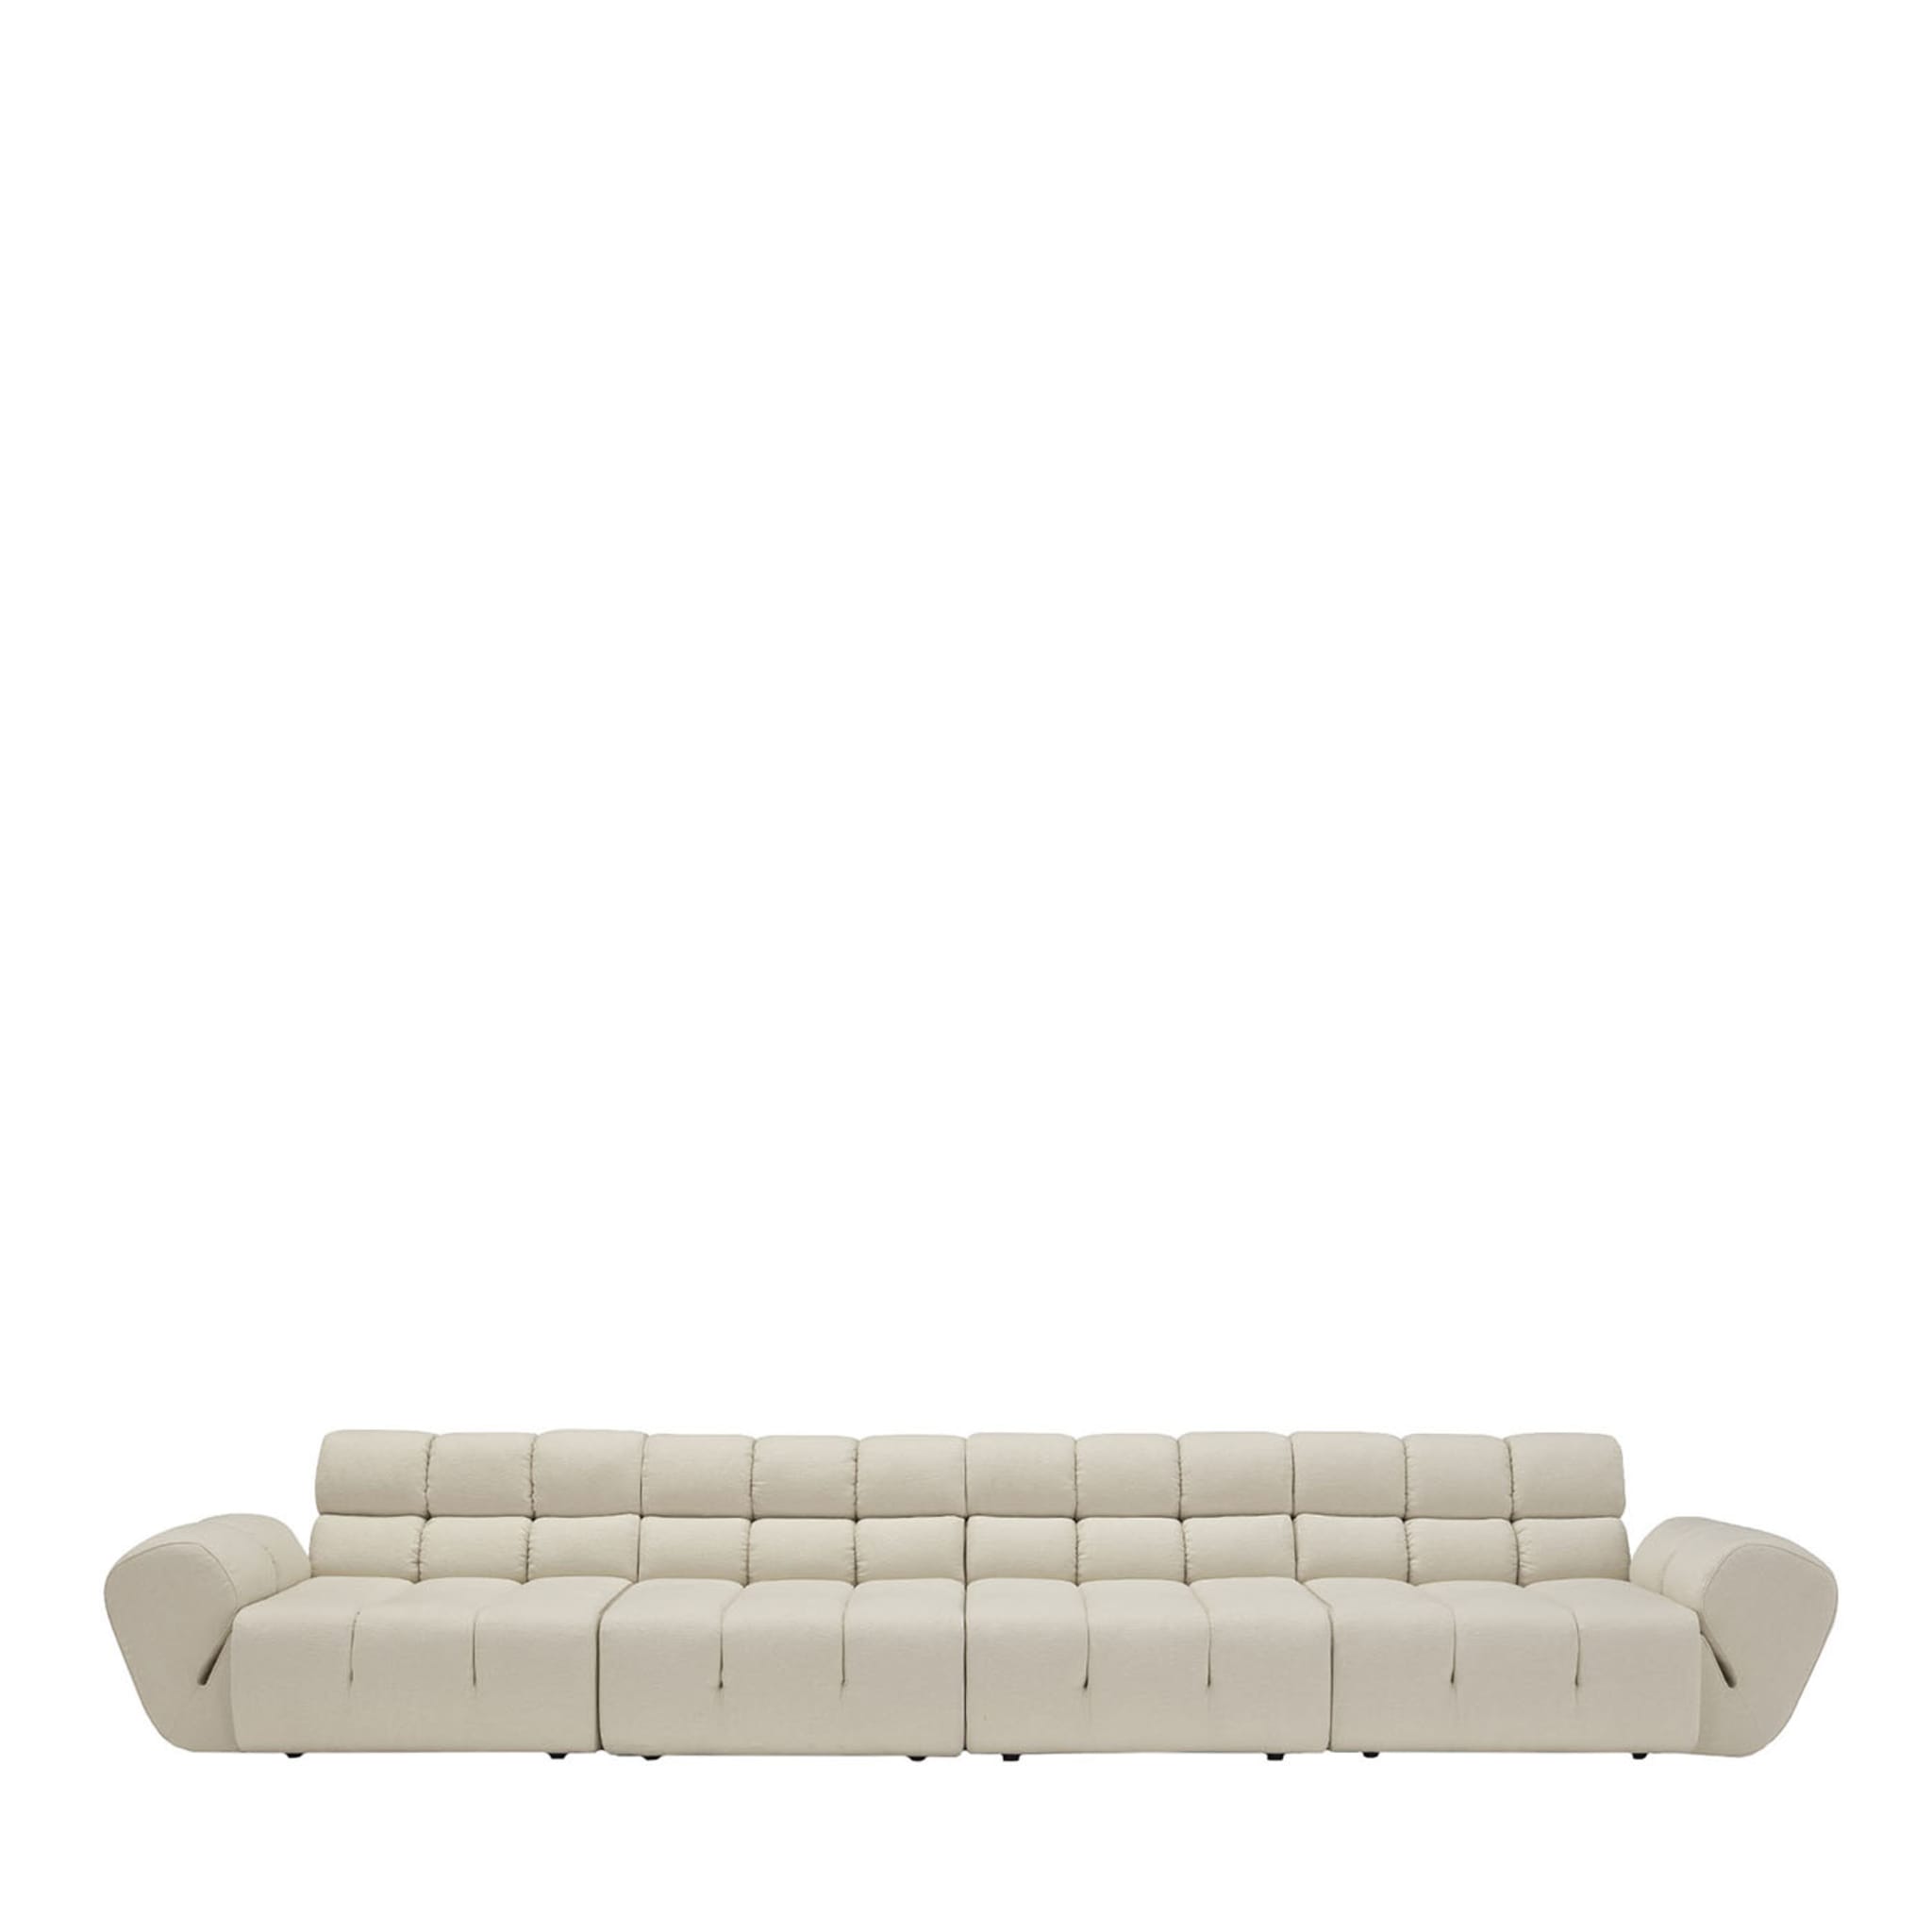 Palmo Modular White Sofa by Emanuel Gargano - Main view